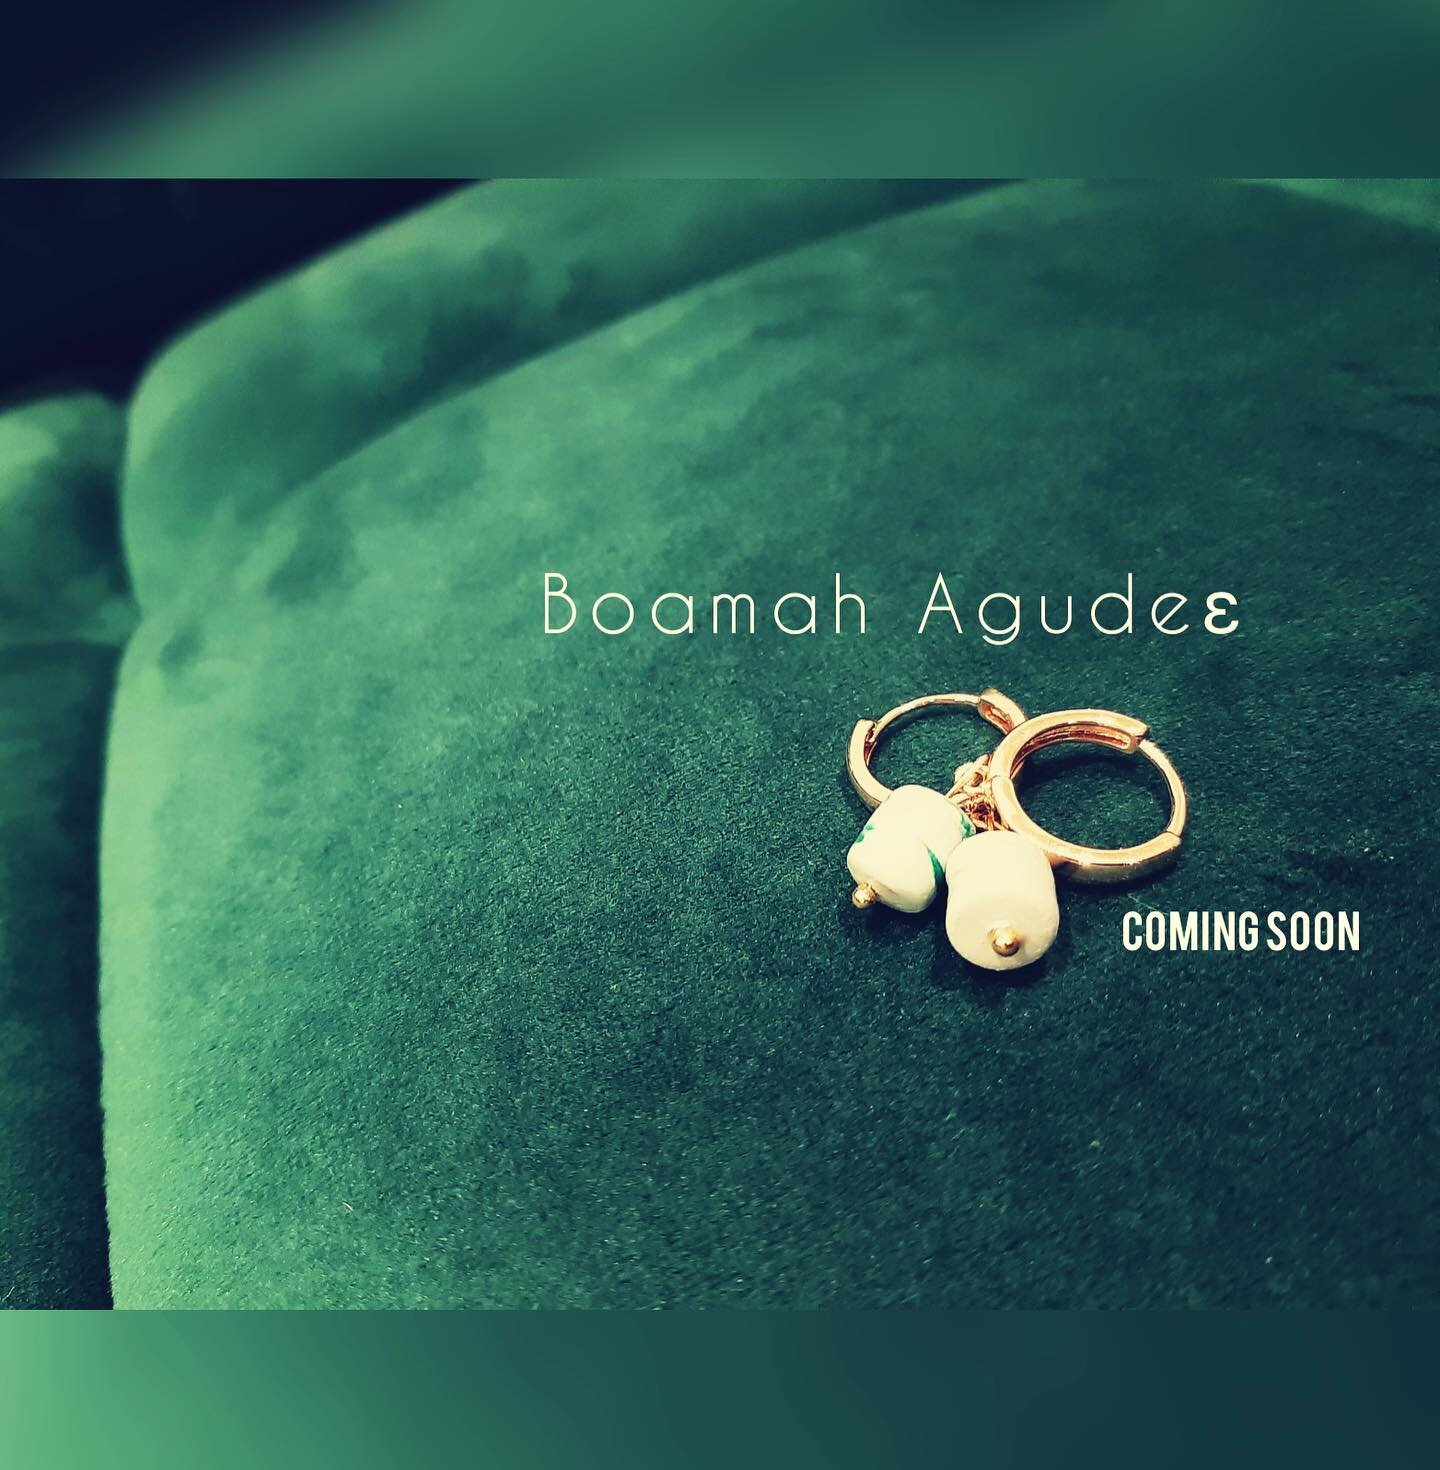 Boamah Agudeɛ [Jewellery]
Handmade porcelain earrings will be online soon.